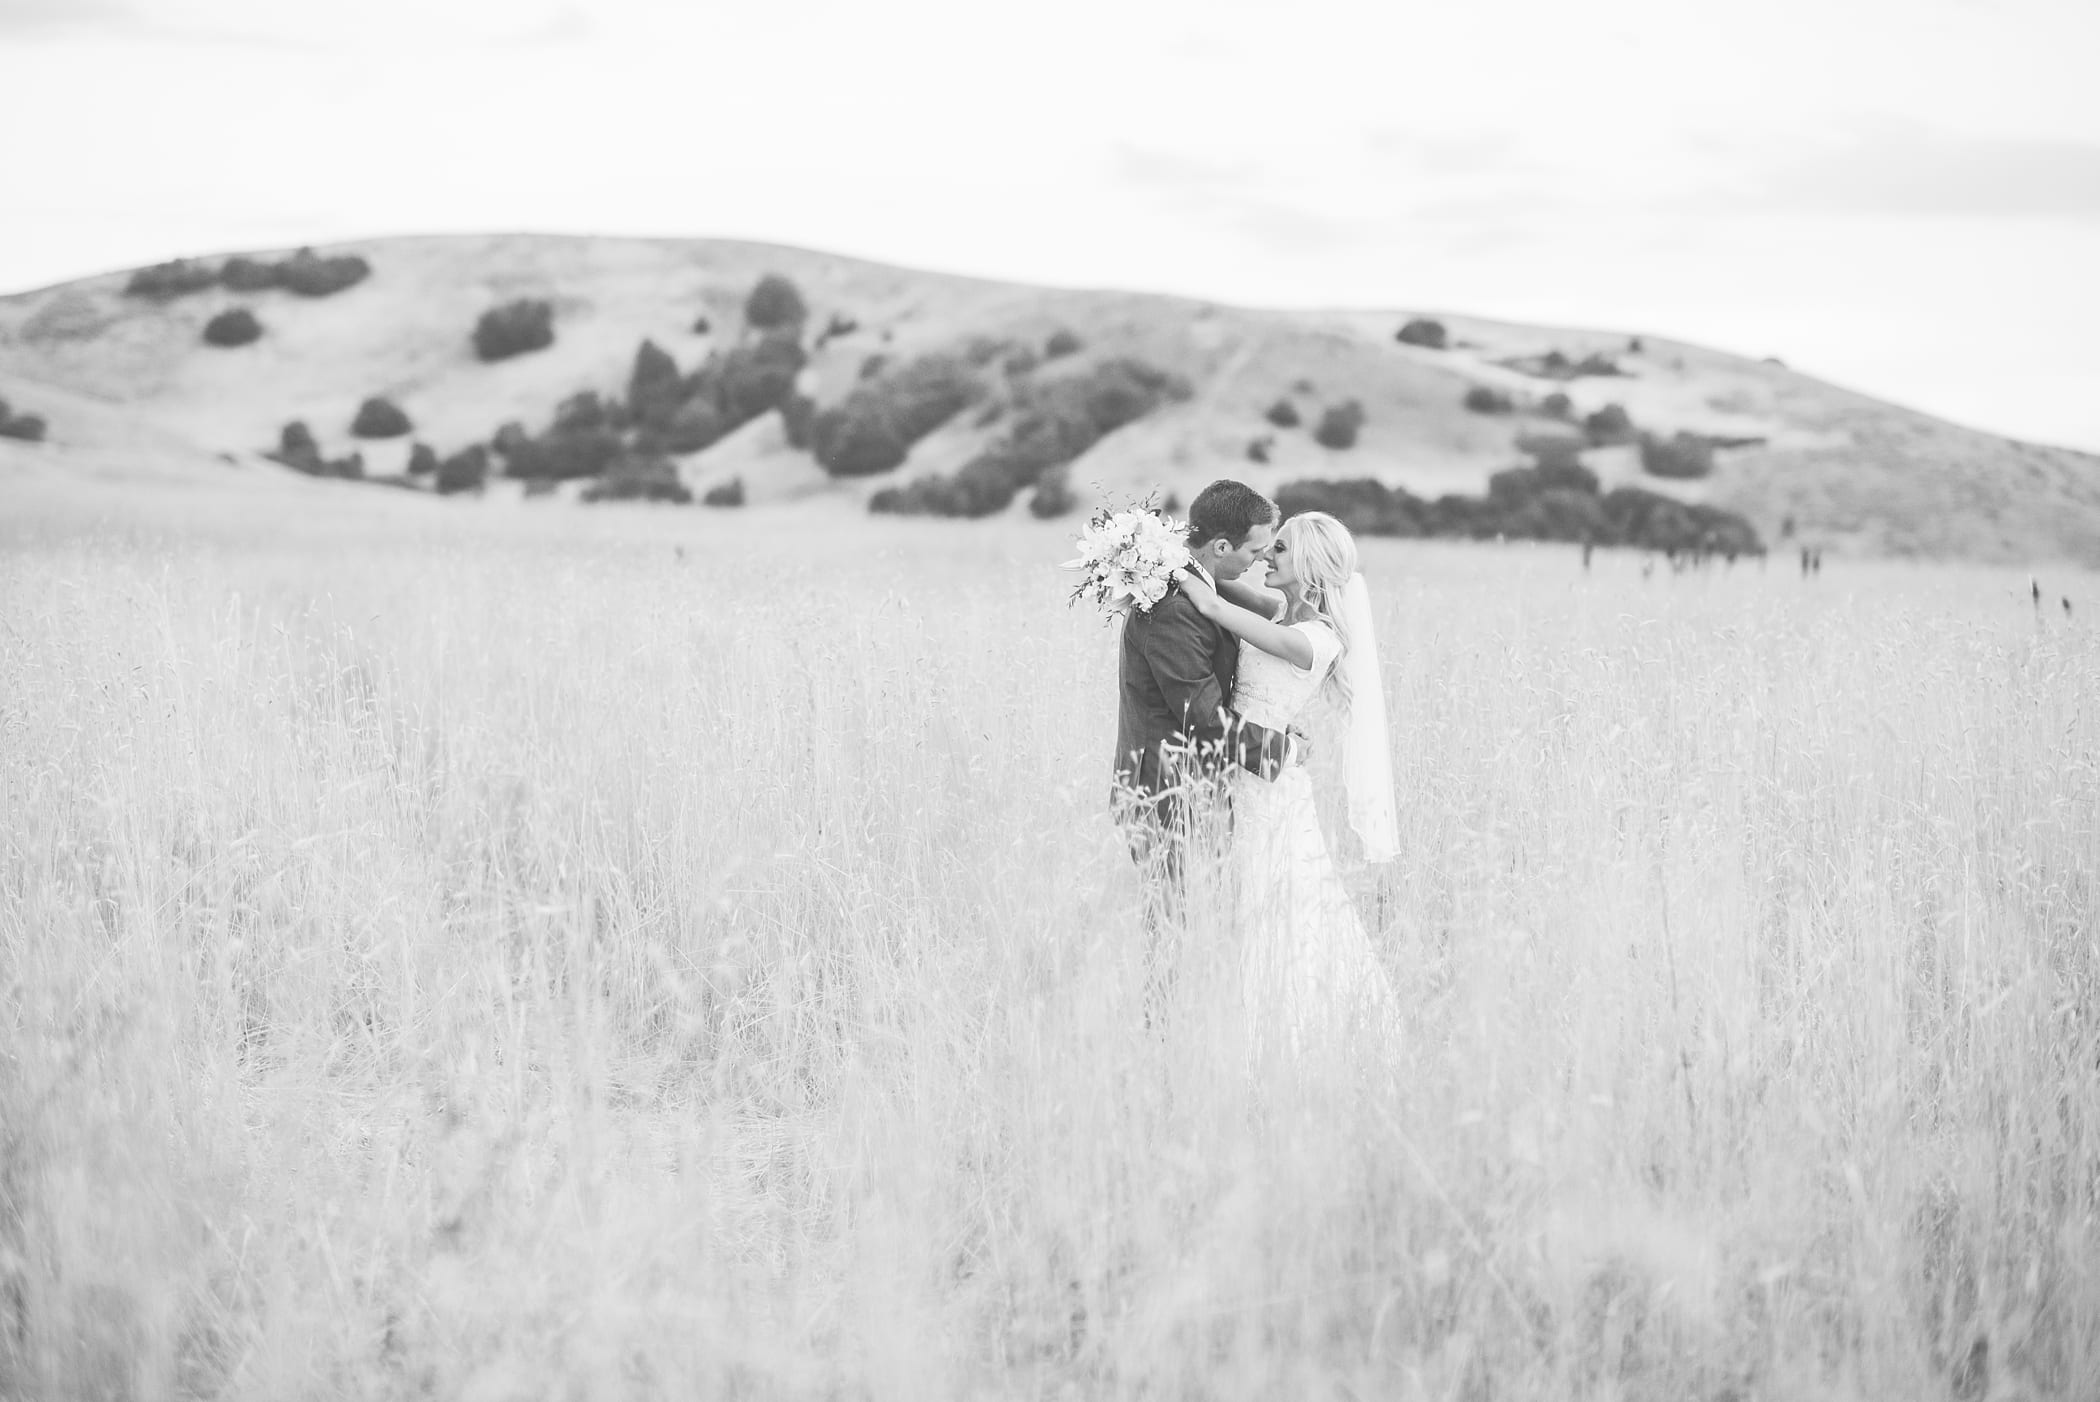 LDS Bountiful Temple Wedding Photographer • Michelle & Logan